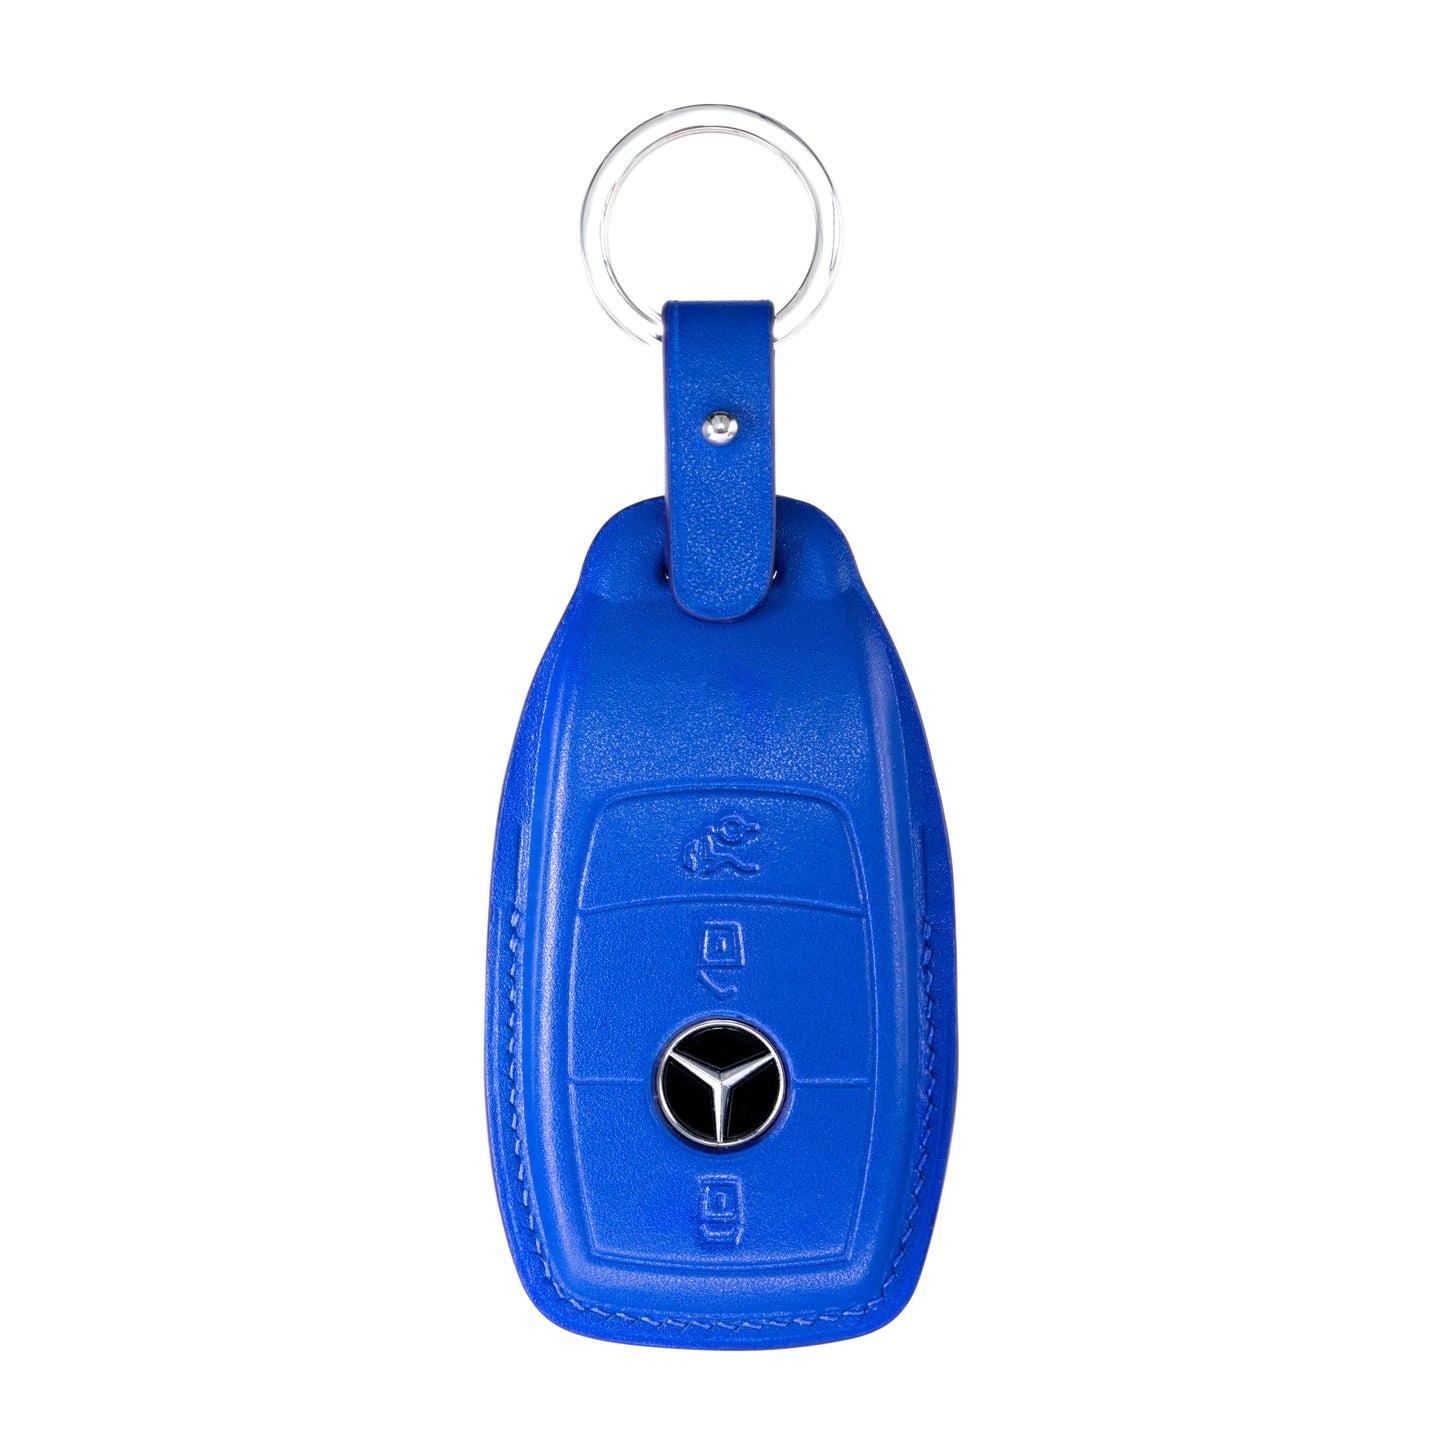 Mercedes E Class Key Fob Cover in Electric Blue Nappa